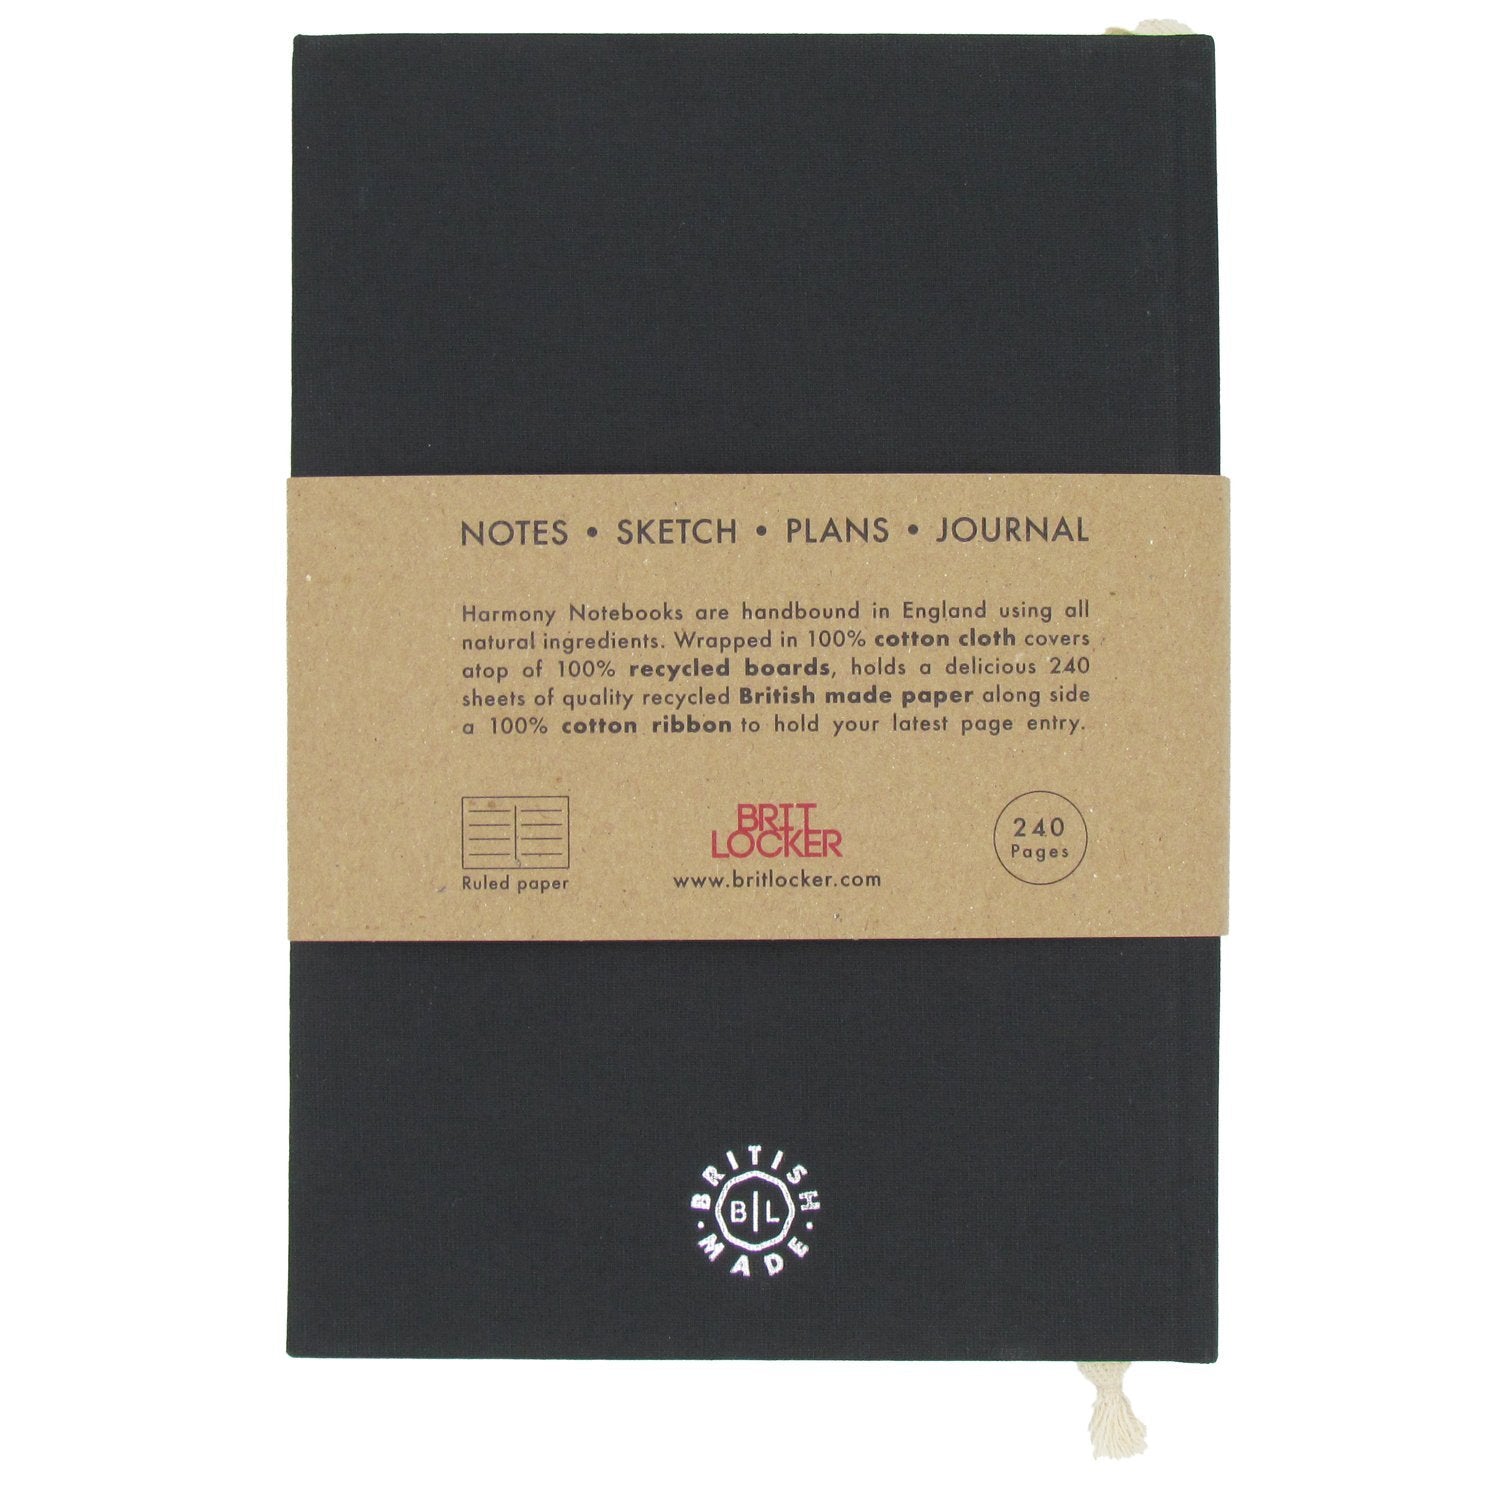 Harmony Eco-Friendly Notebook - Black - Made in Britain - BRIT LOCKER